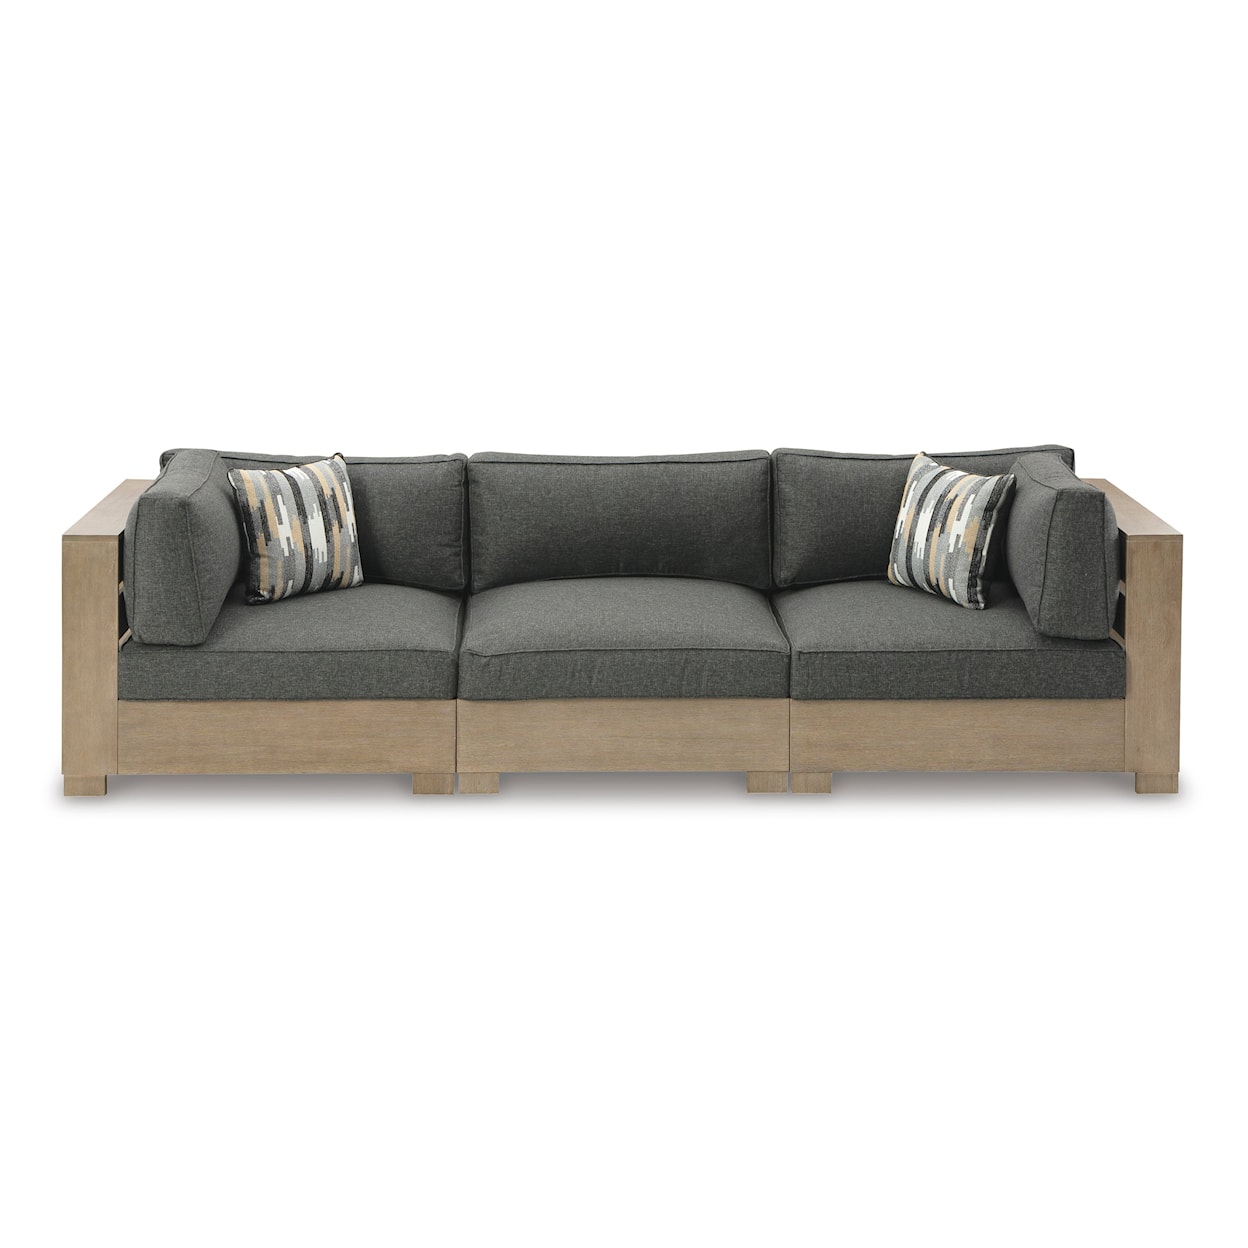 Ashley Furniture Signature Design Citrine Park Outdoor Sectional Sofa